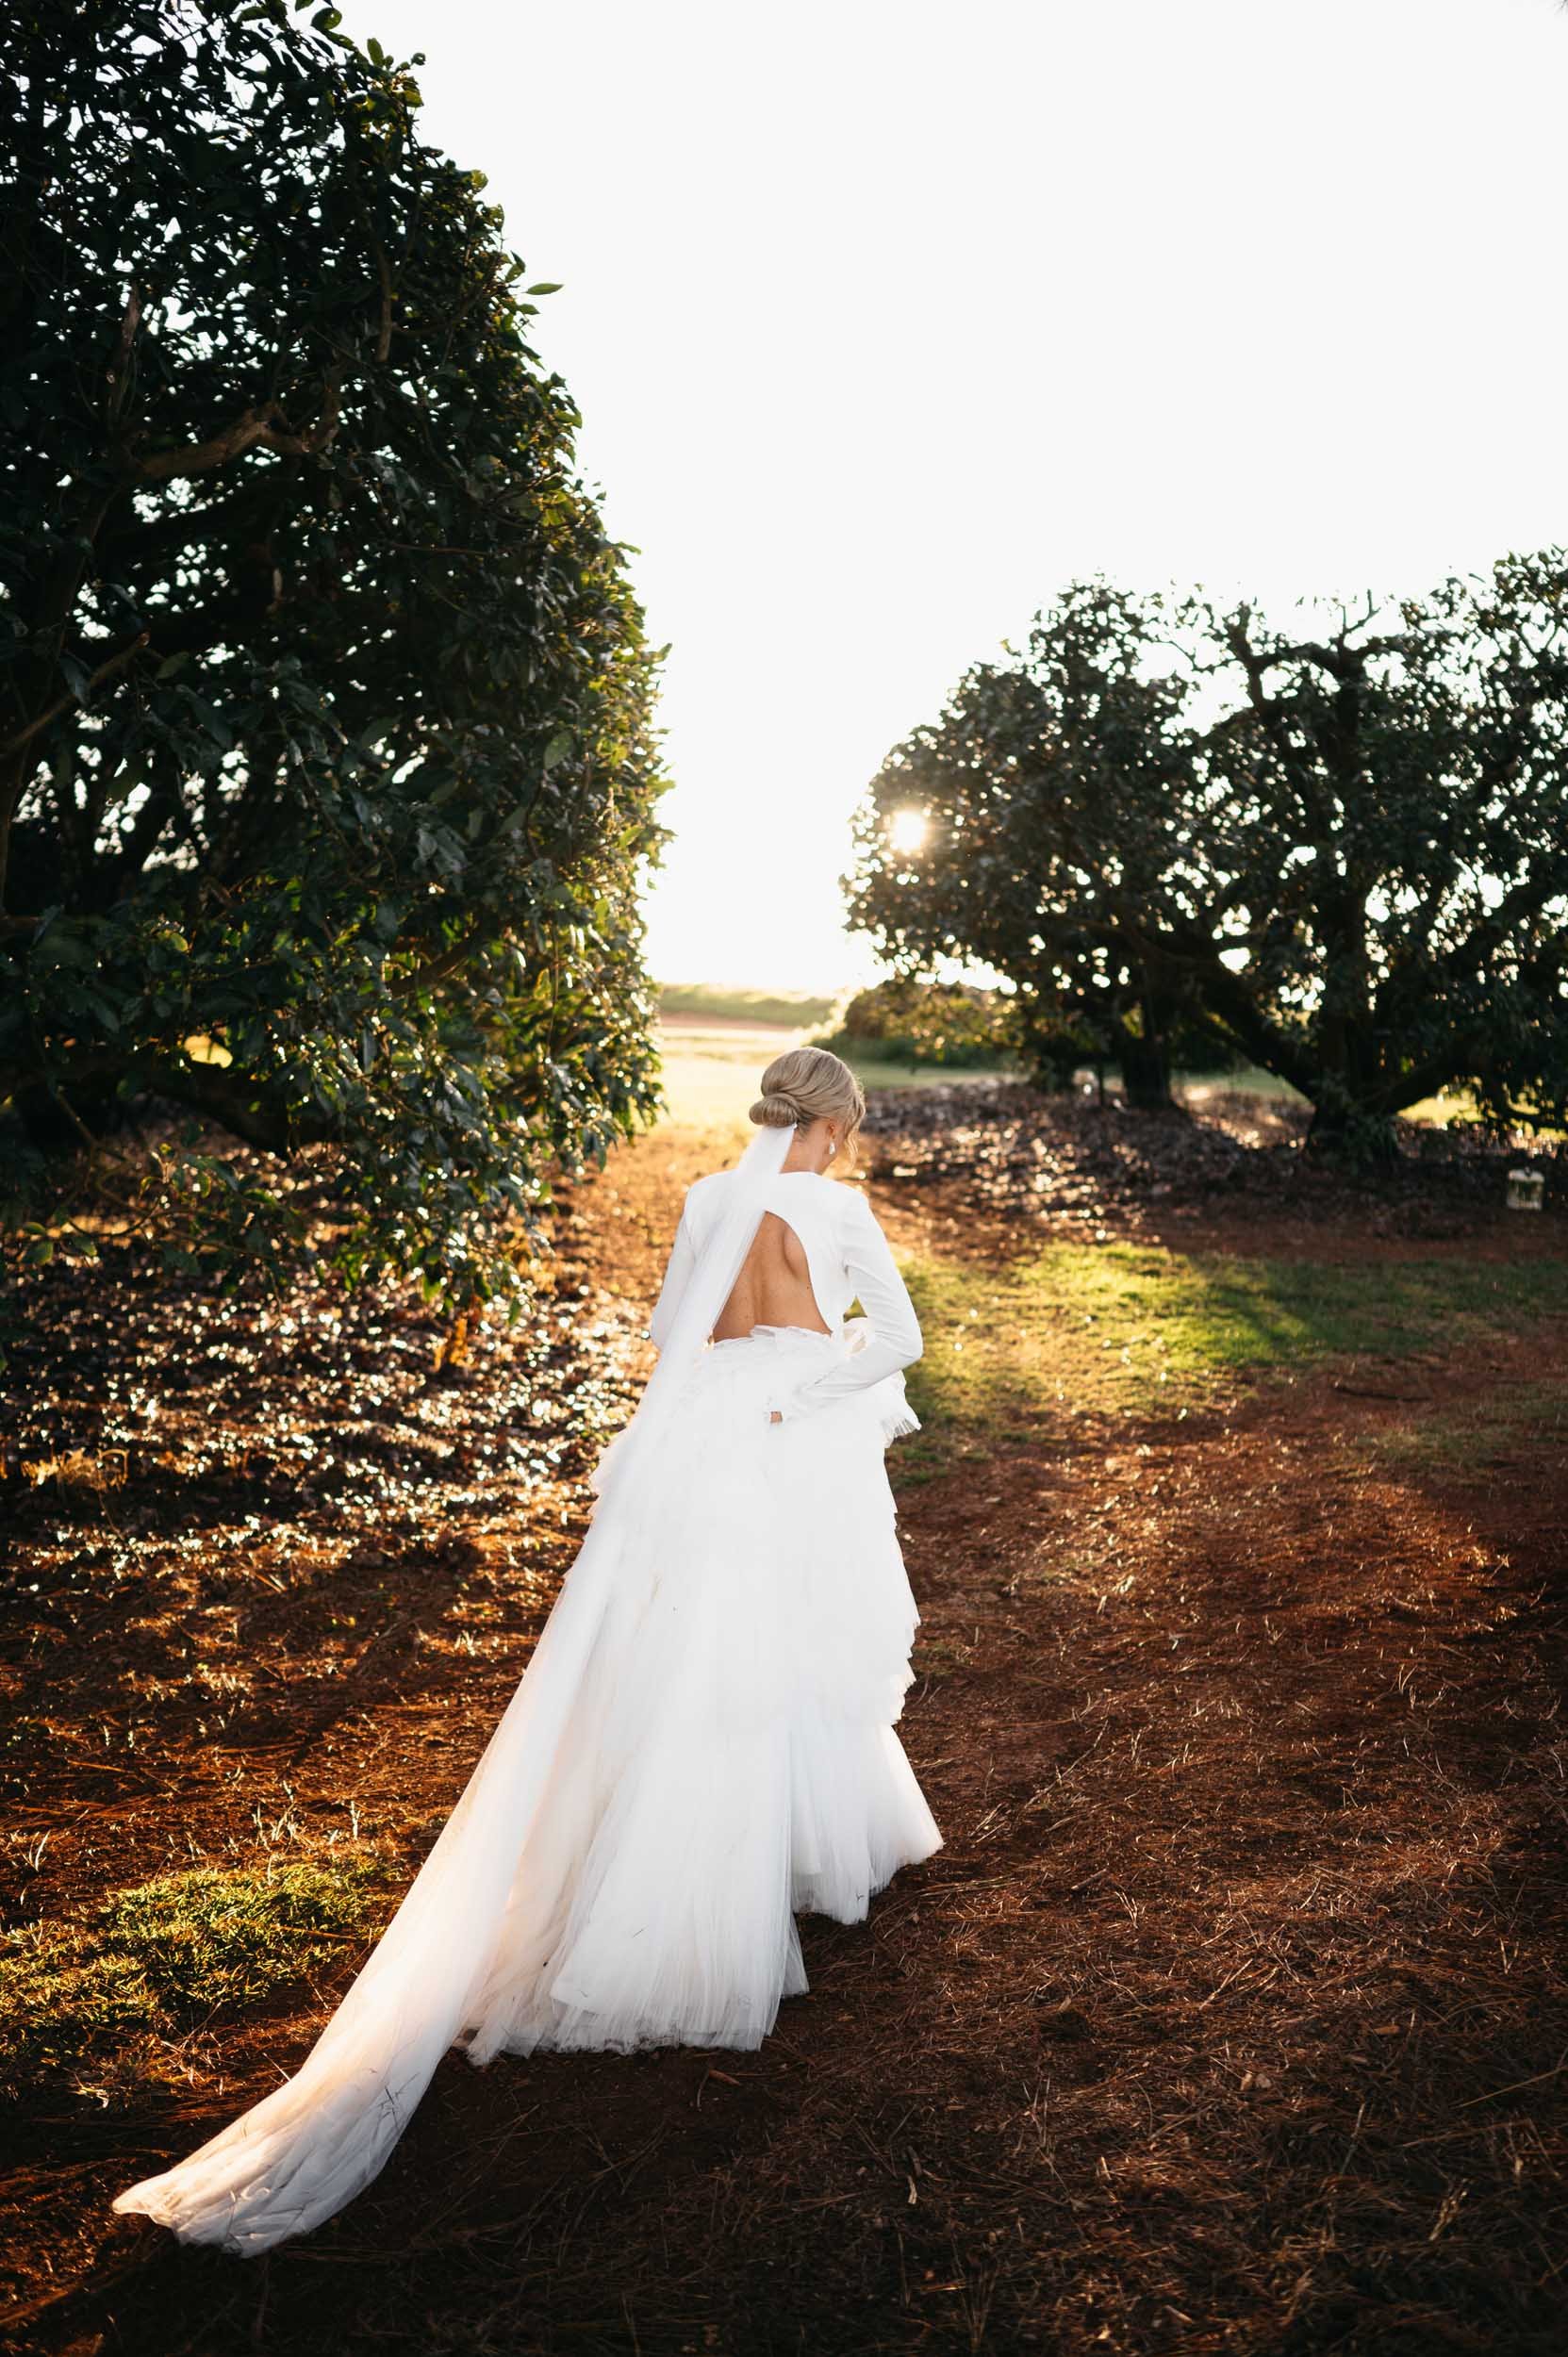 The Raw Photographer - Cairns Wedding Photographer - Mareeba Tablelands - Queensland photography - Kyha dress - luxury-51.jpg